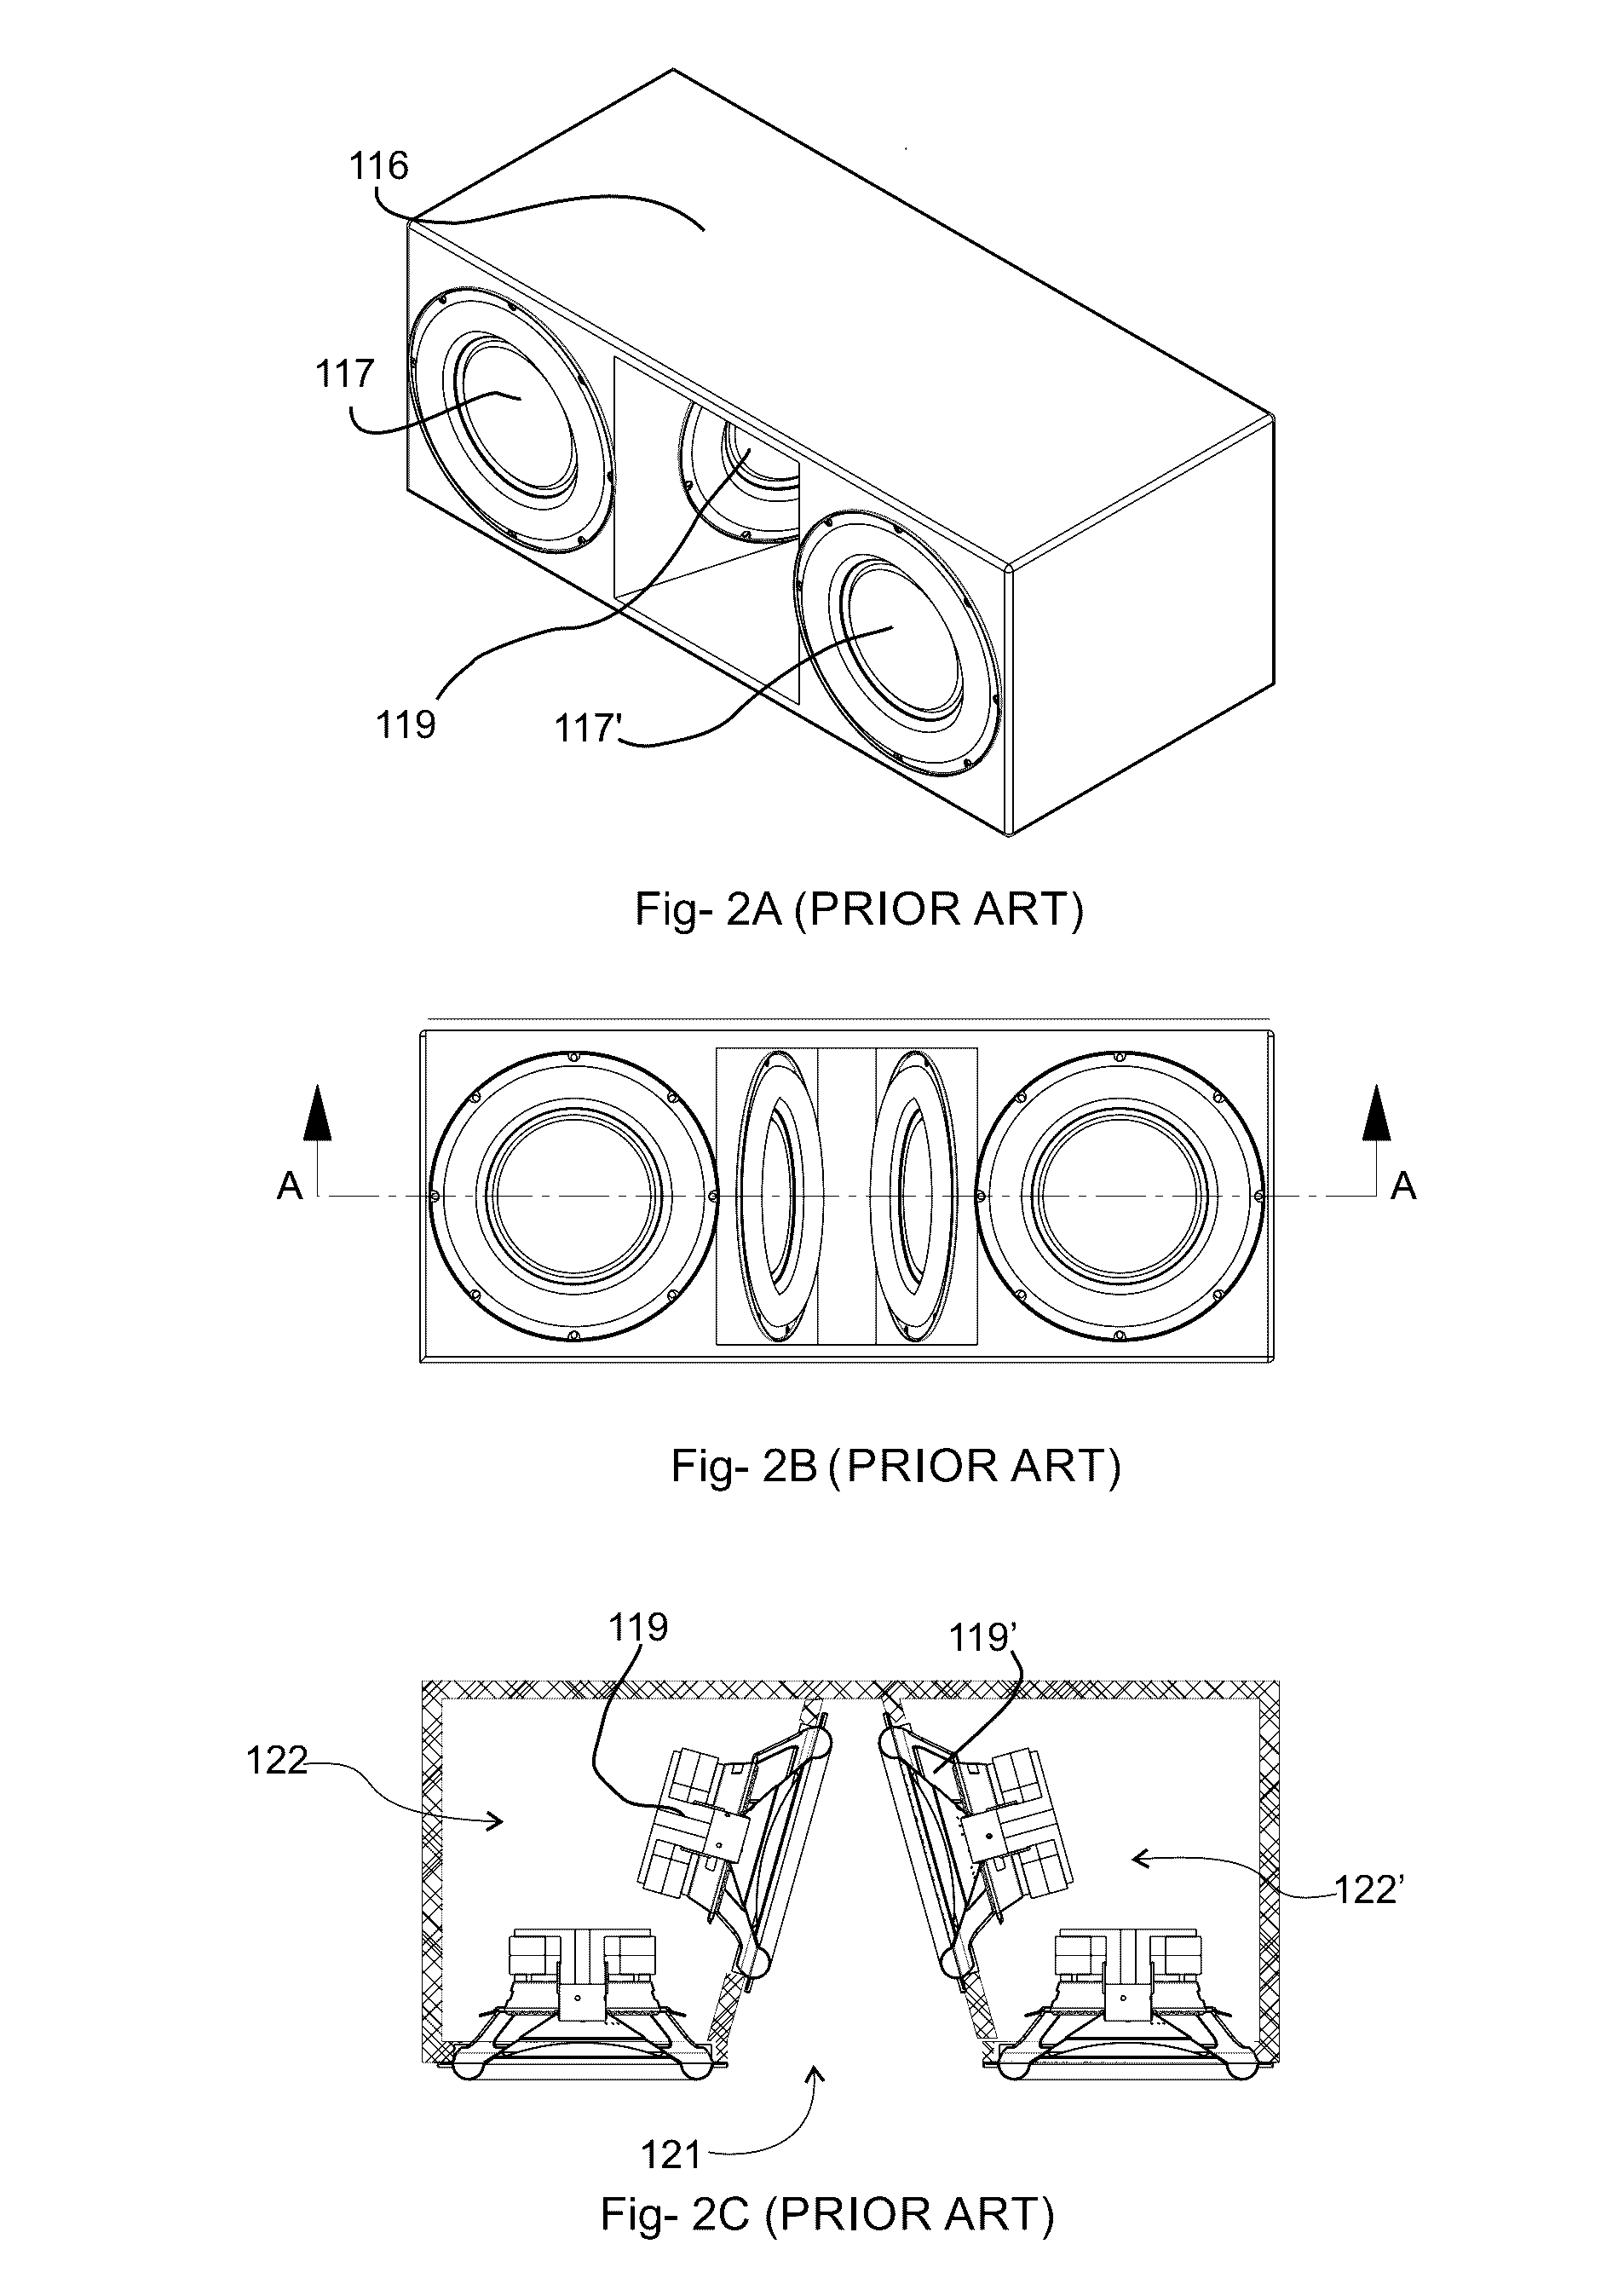 Passive acoustic radiator module